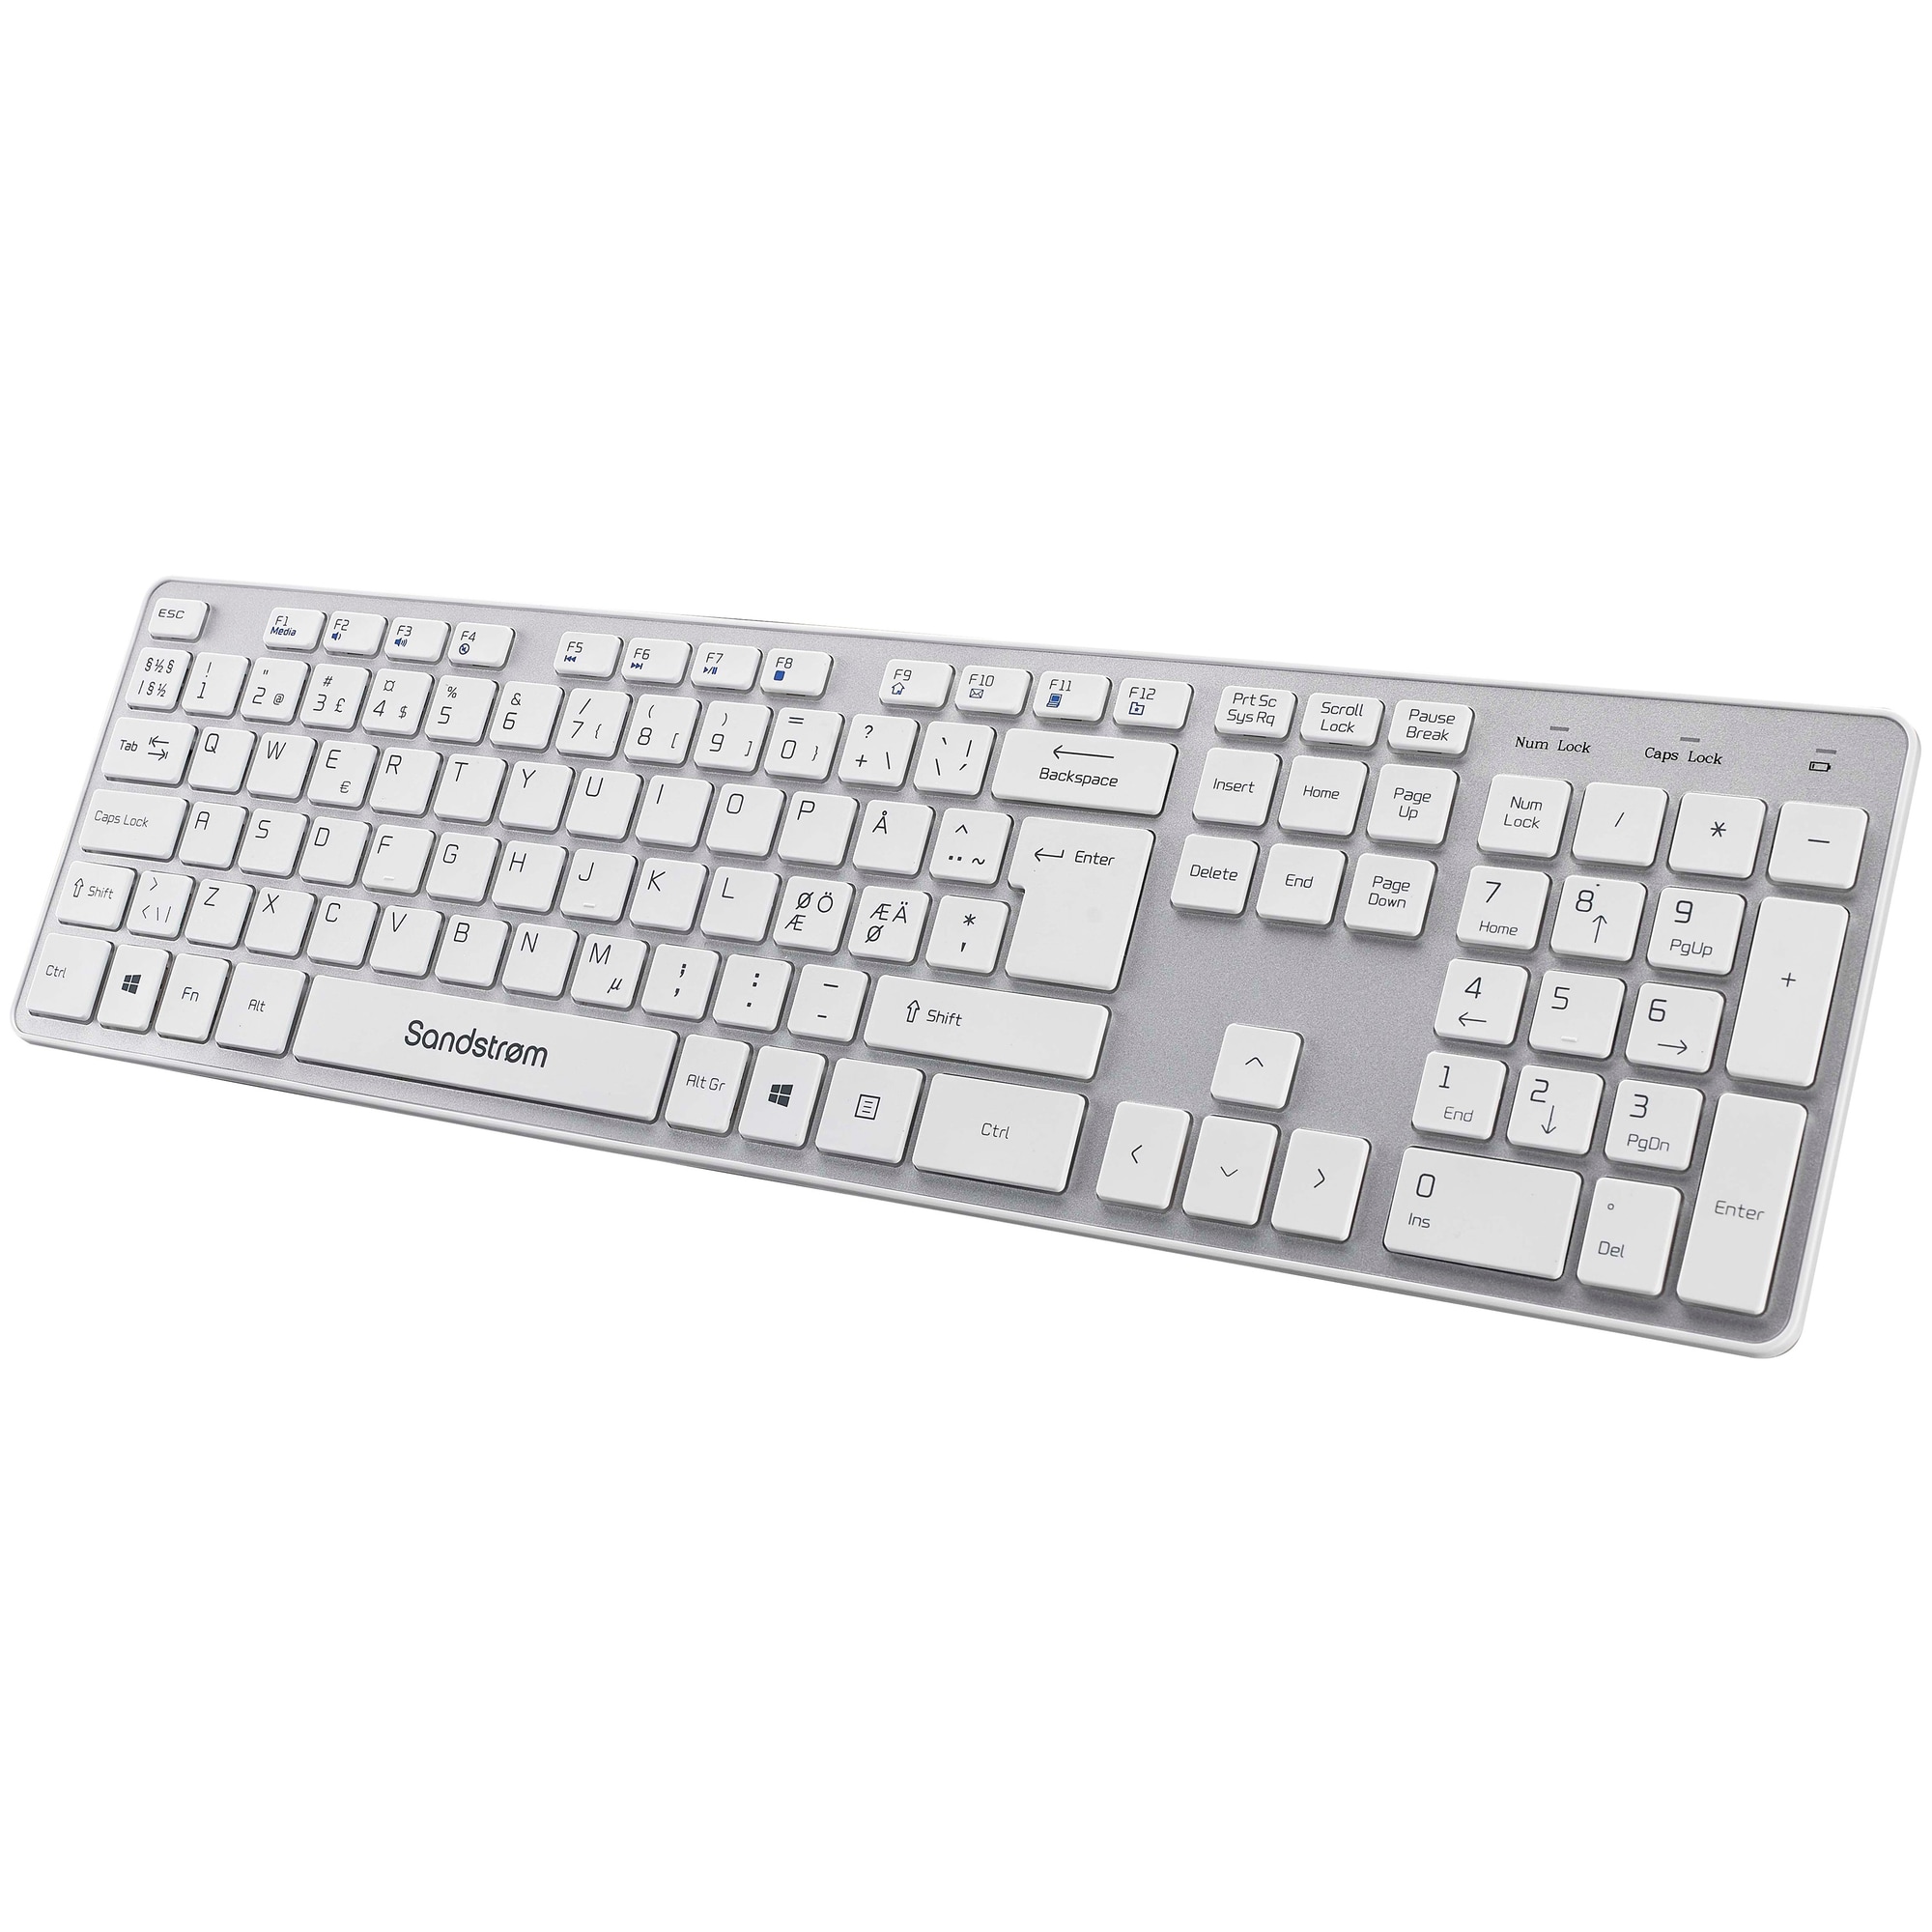 Sandstrøm trådløst tastatur (hvit/grå) - Mus og tastatur - Elkjøp